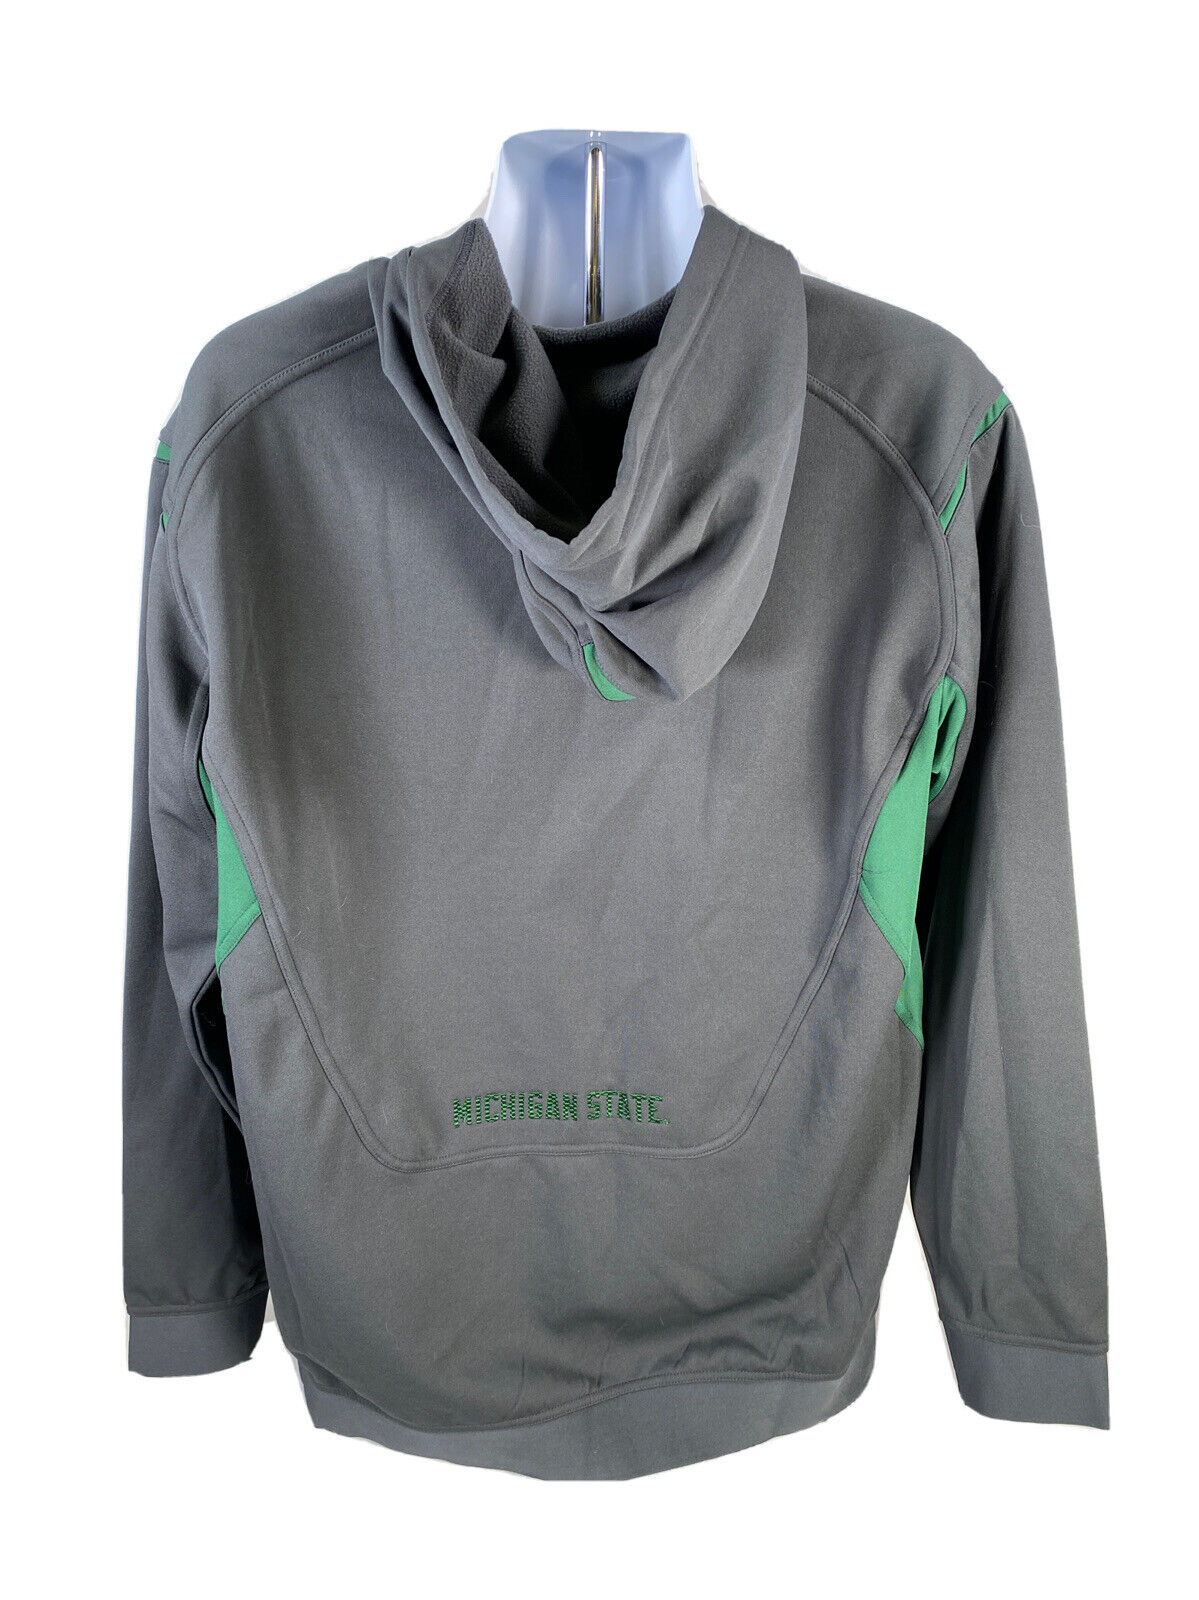 Nike Team Sudadera con capucha de manga larga MSU Therma gris/verde para hombre talla M